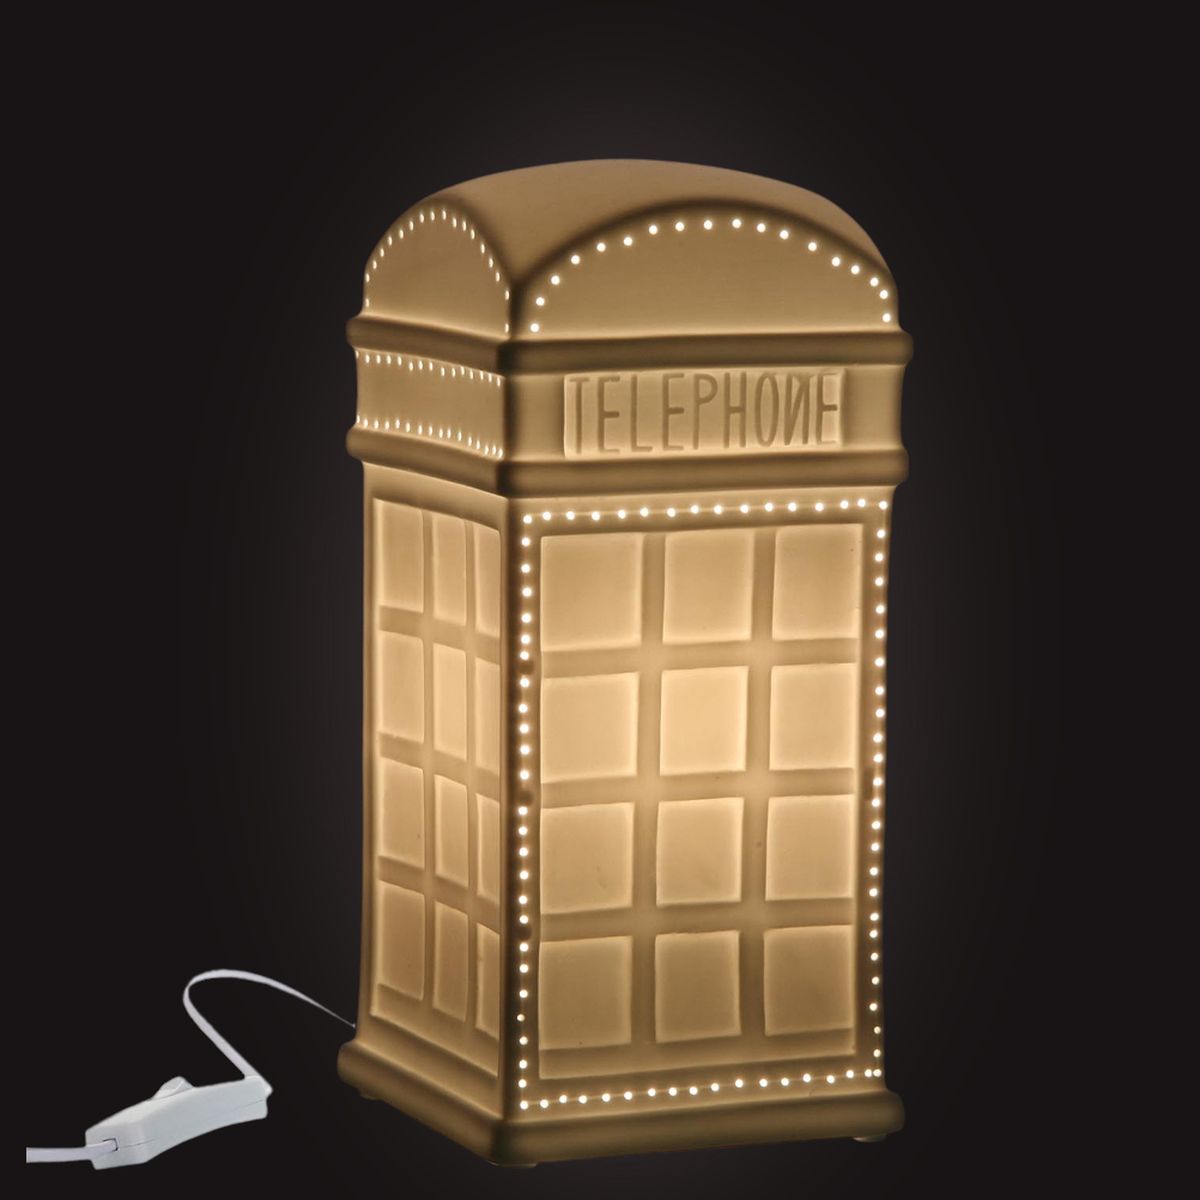 London telephone box table lamp - 24.5 cm